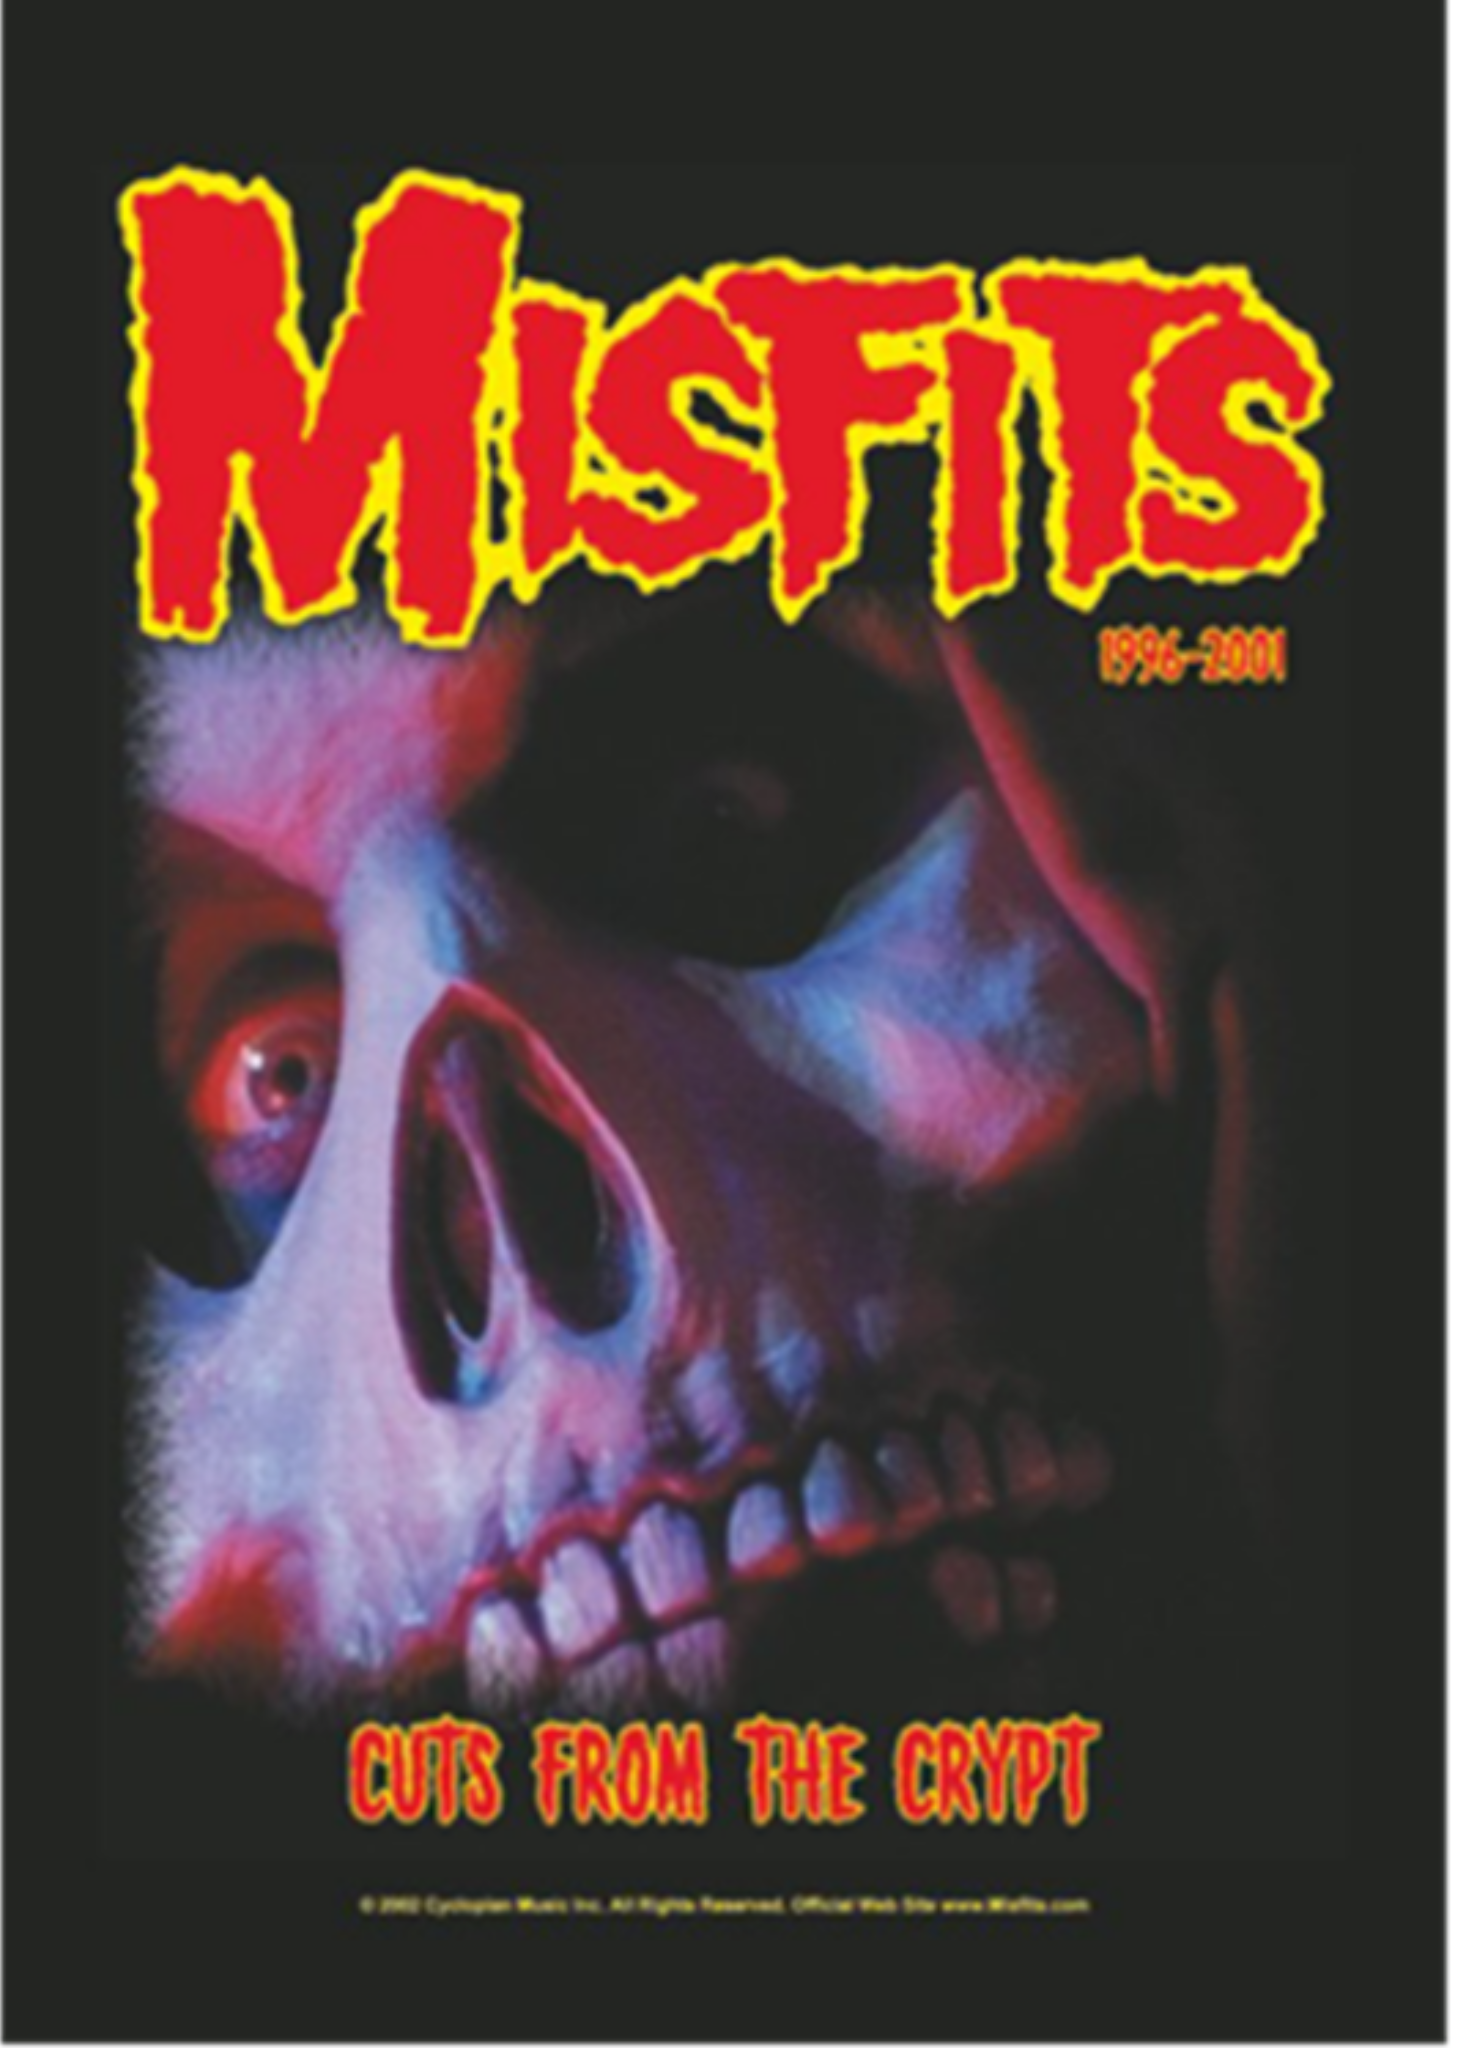 Misfits